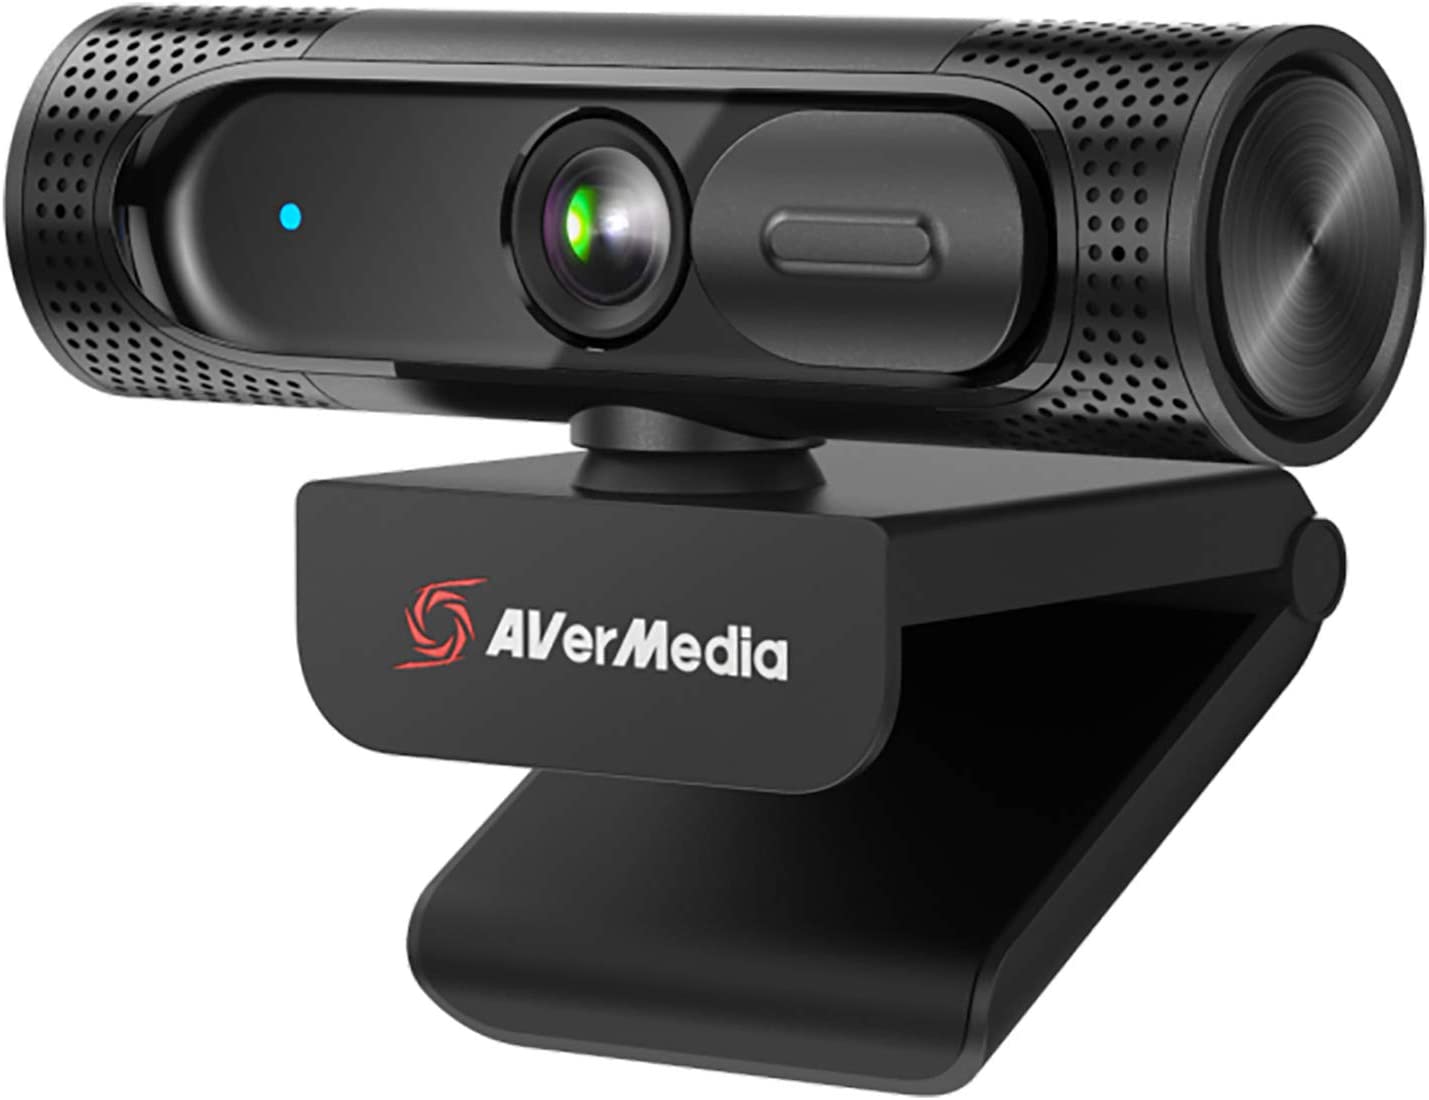 AverMedia PW315 풀 HD 1080p 60fps 웹캠 Cam Engine 및 타사 소프트웨어 지원을 통한 게임 스트리밍 비디오 통화 컨텐츠 생성